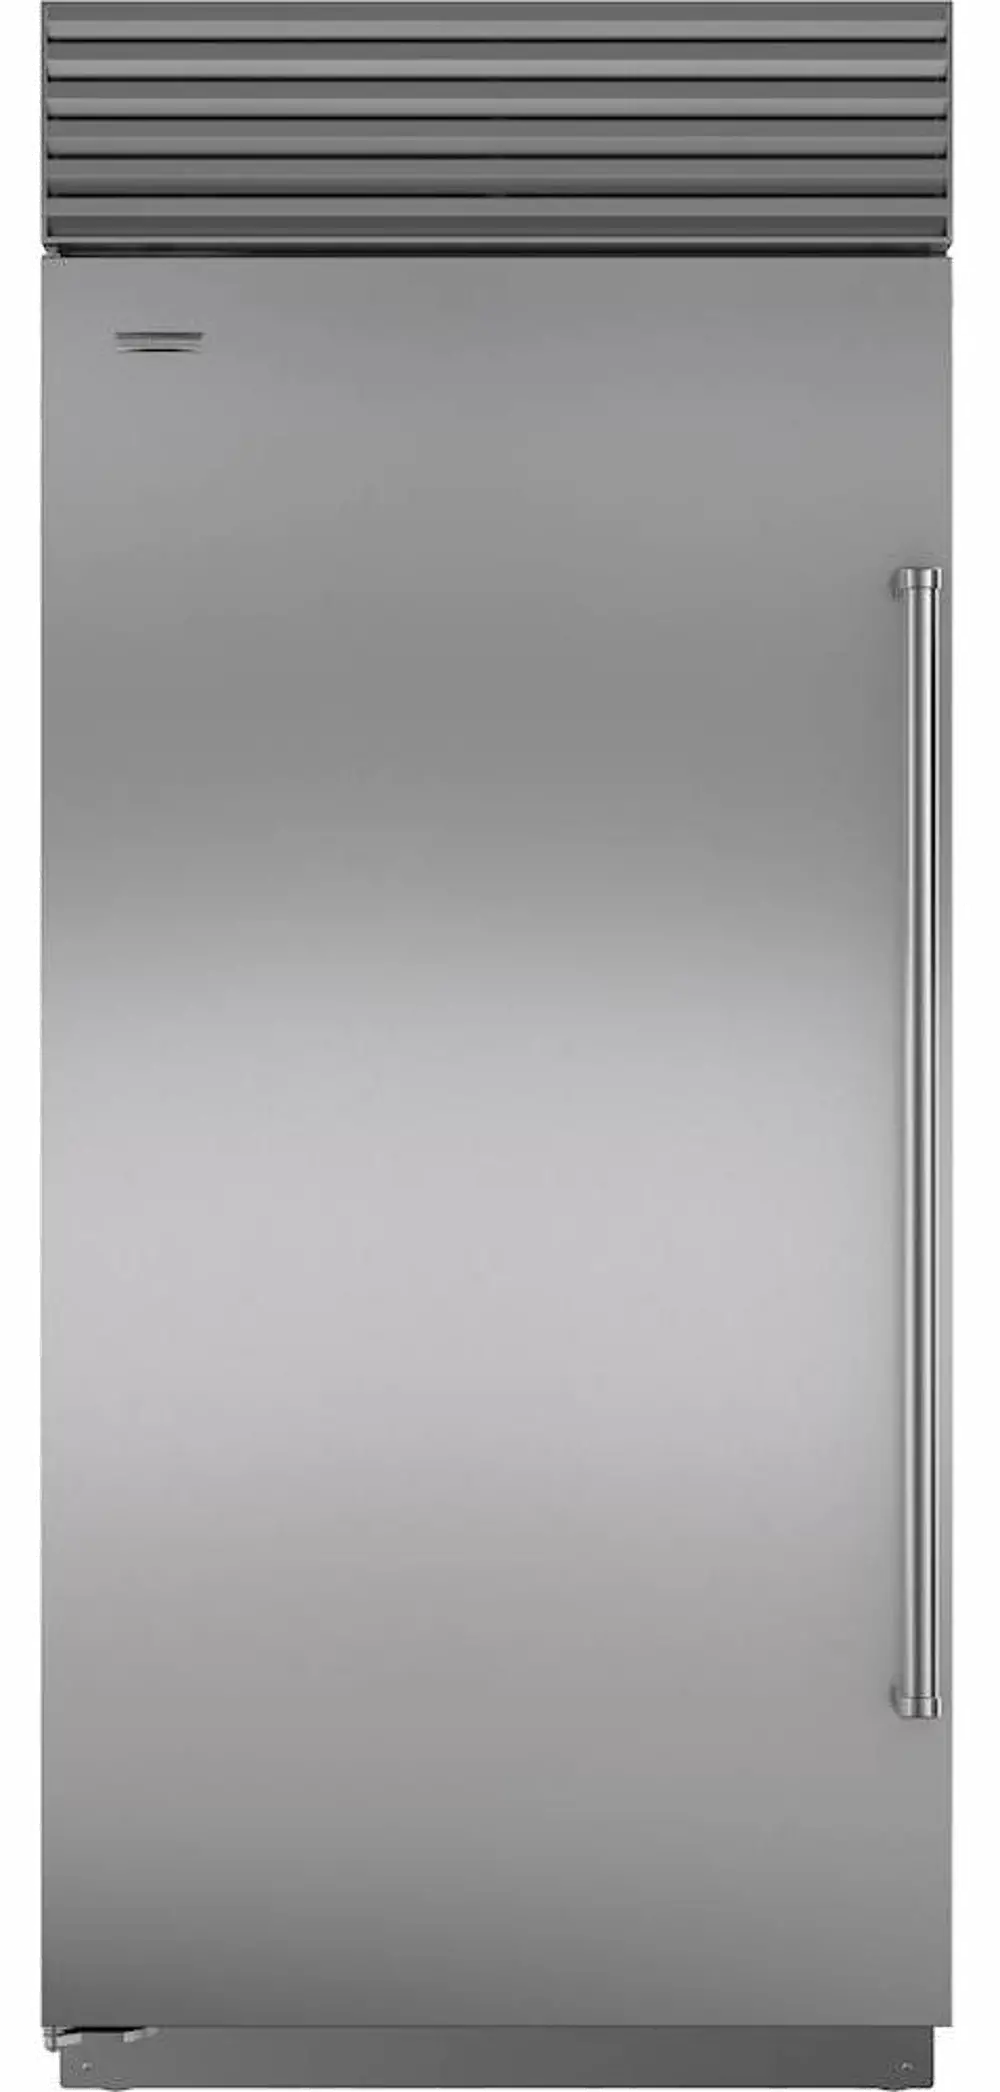 BI-36F/S/PH-LH Sub-Zero 36 Inch Classic Freezer - Left Hinge, Professional Handle-1